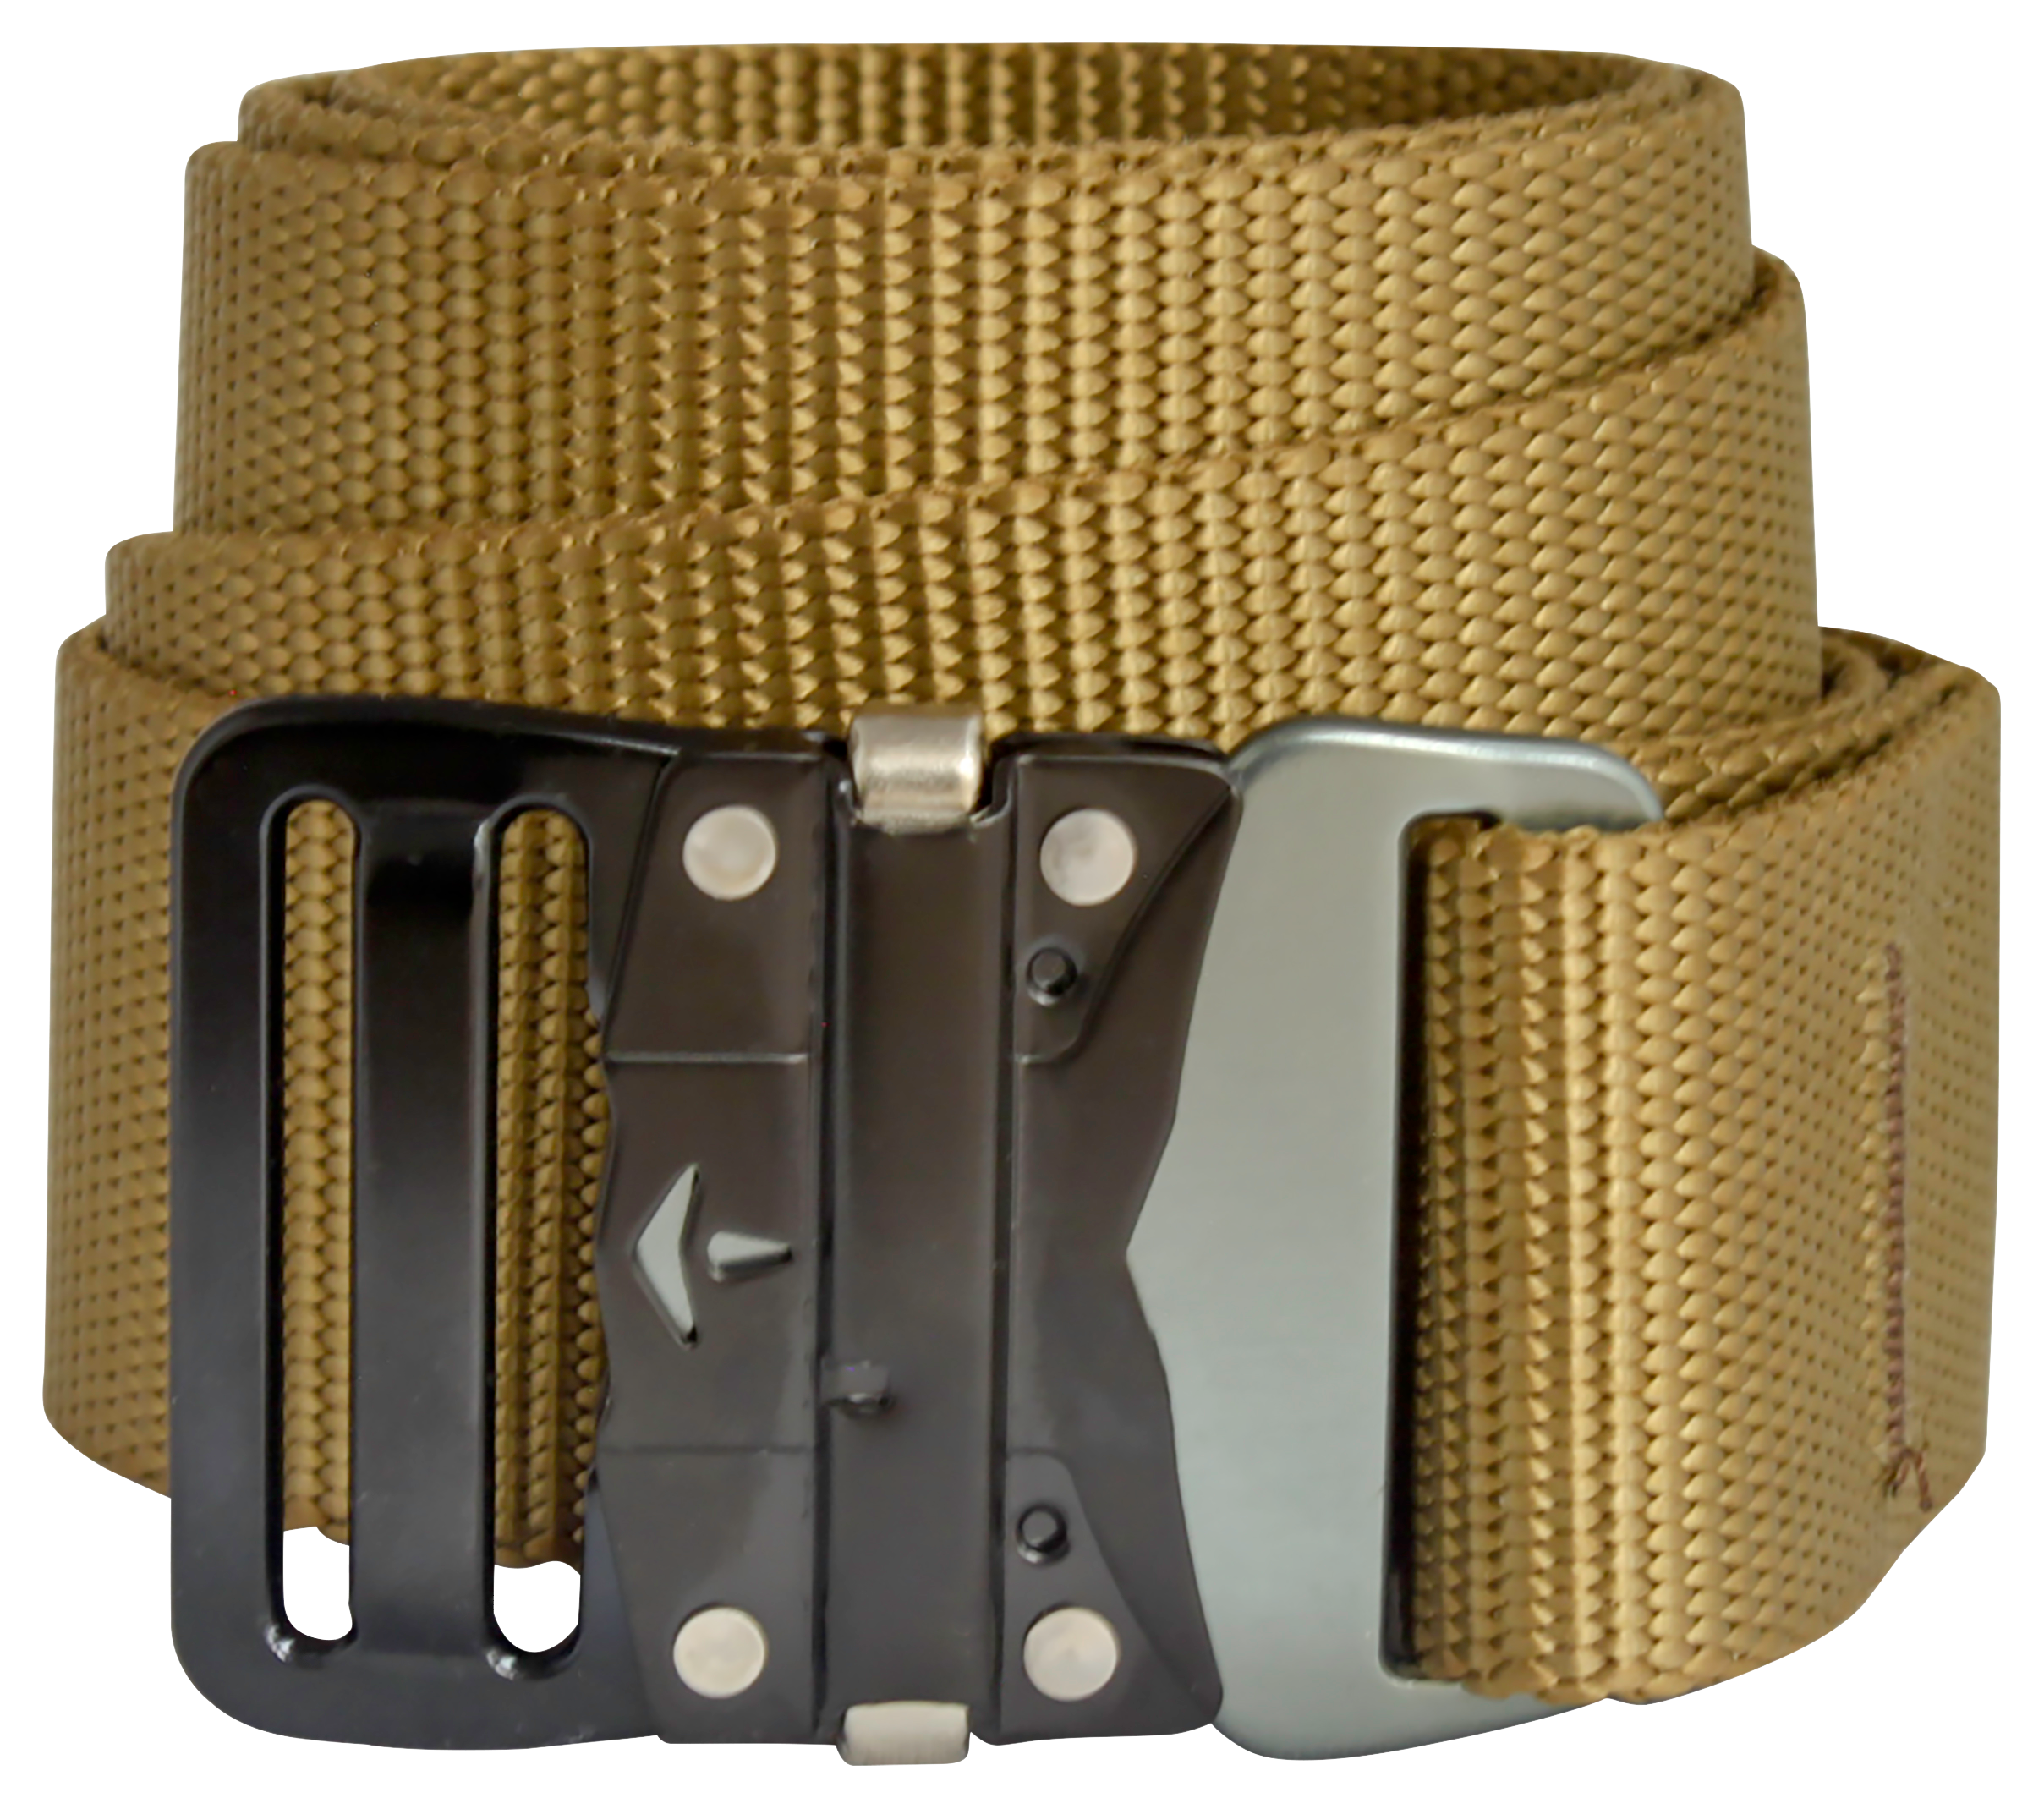 Bison Designs 38mm LoPro Buckle Belt for Men - Coyote Brown - 2XL